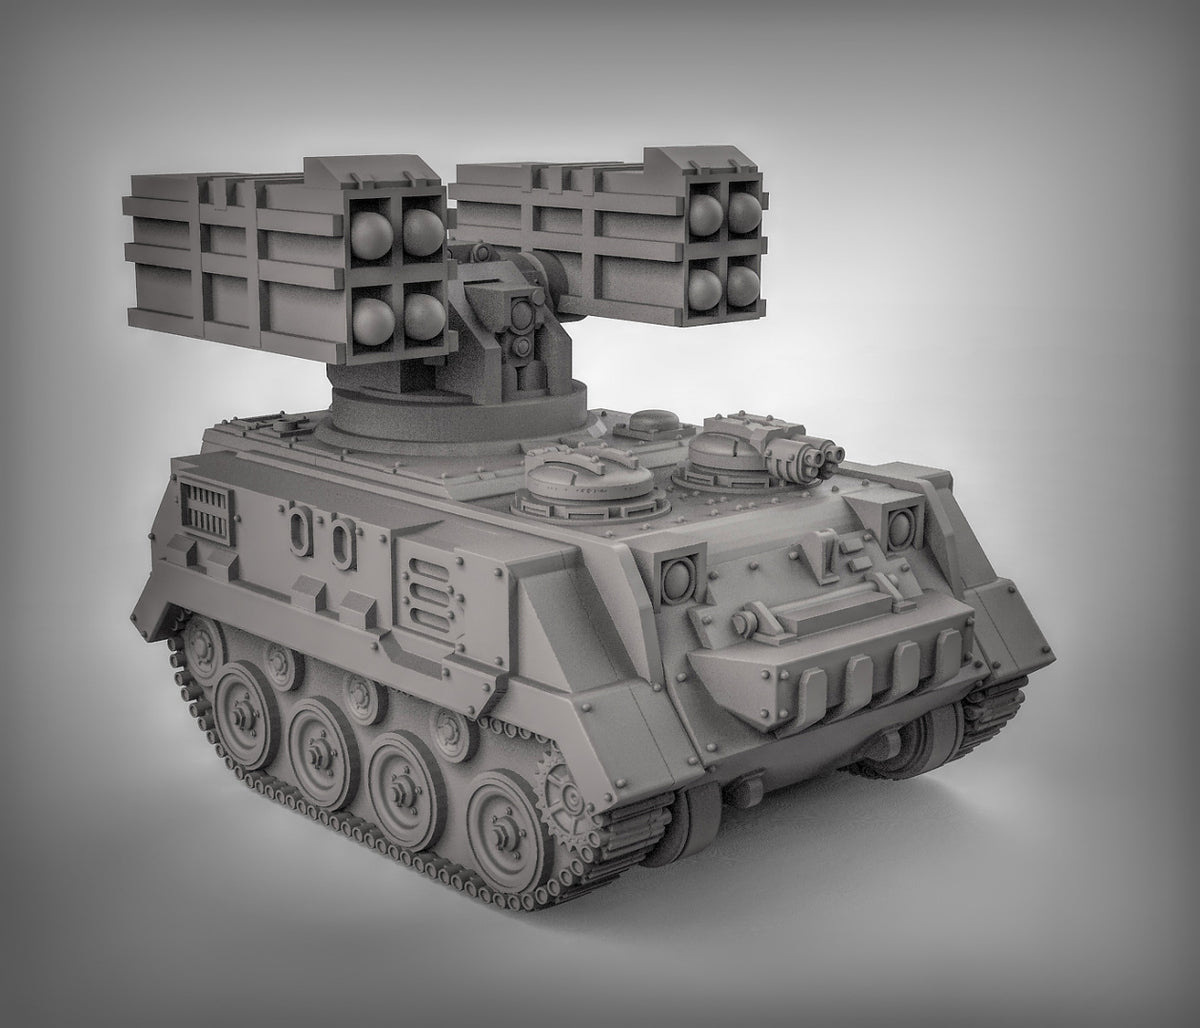 MK Rocket Model Kit - Tank Collection for 28mm Miniature Wargames & Terrain